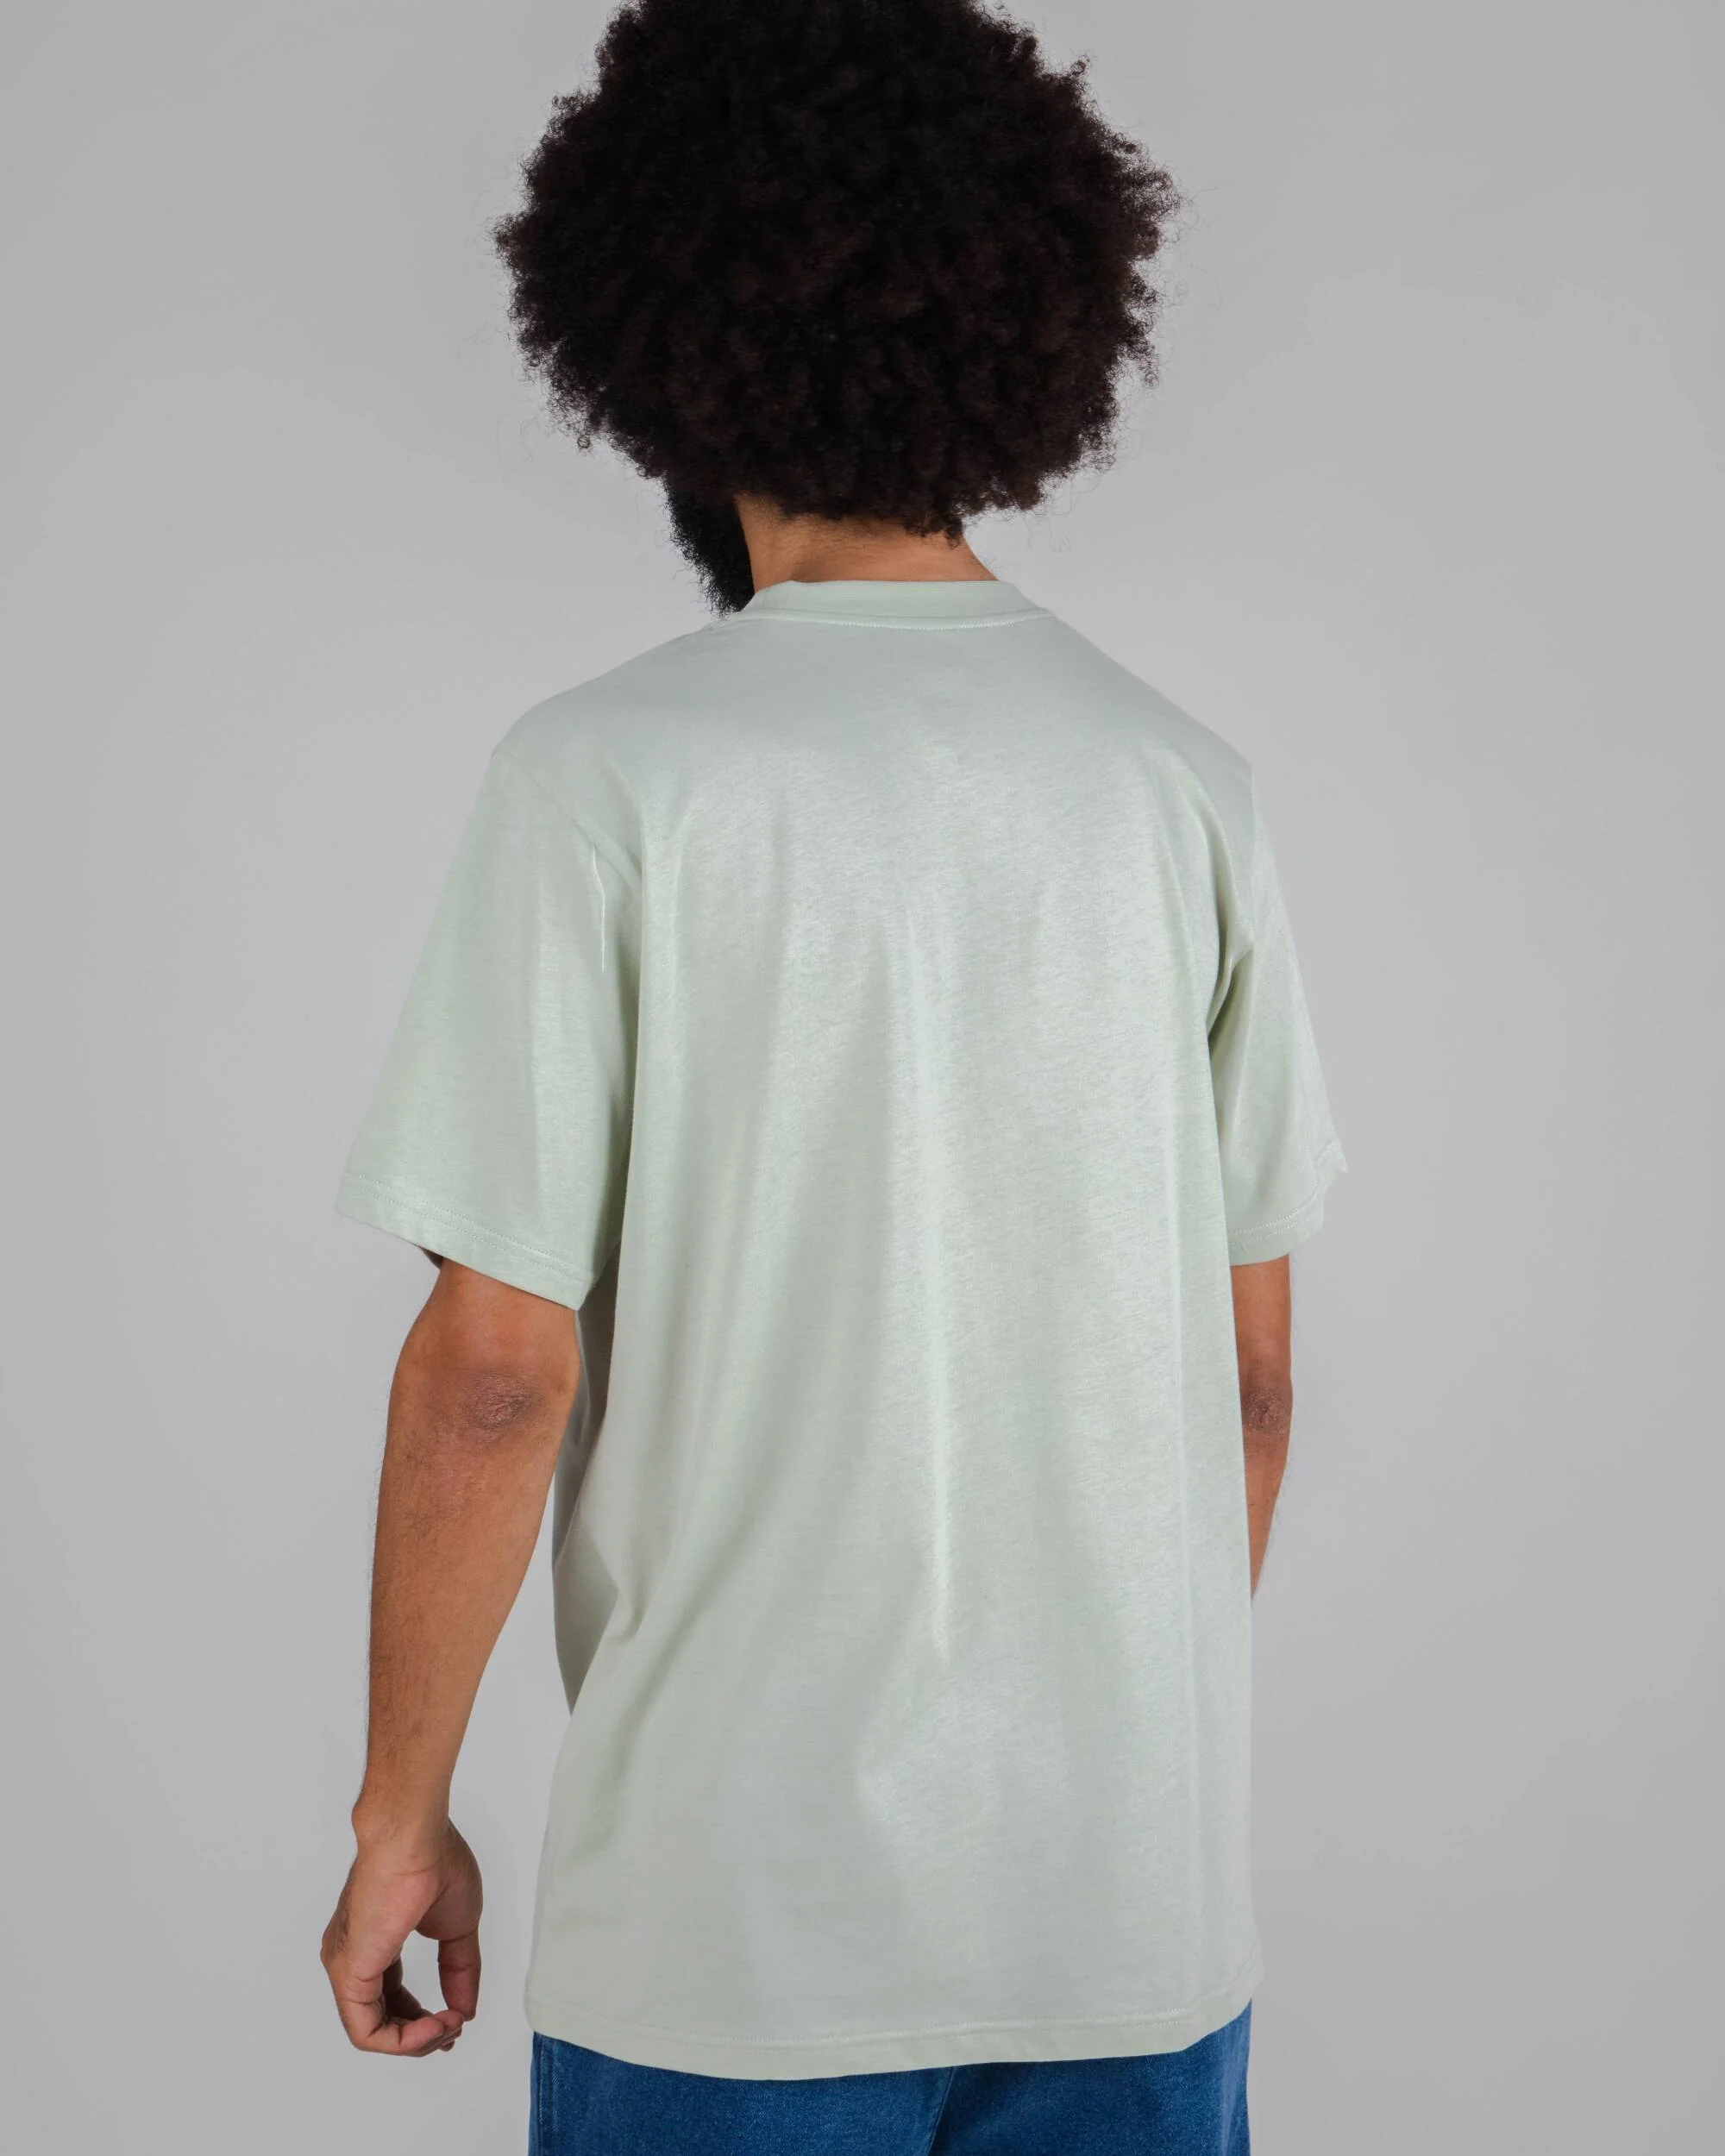 T-Shirt Patch Playmobil unisex